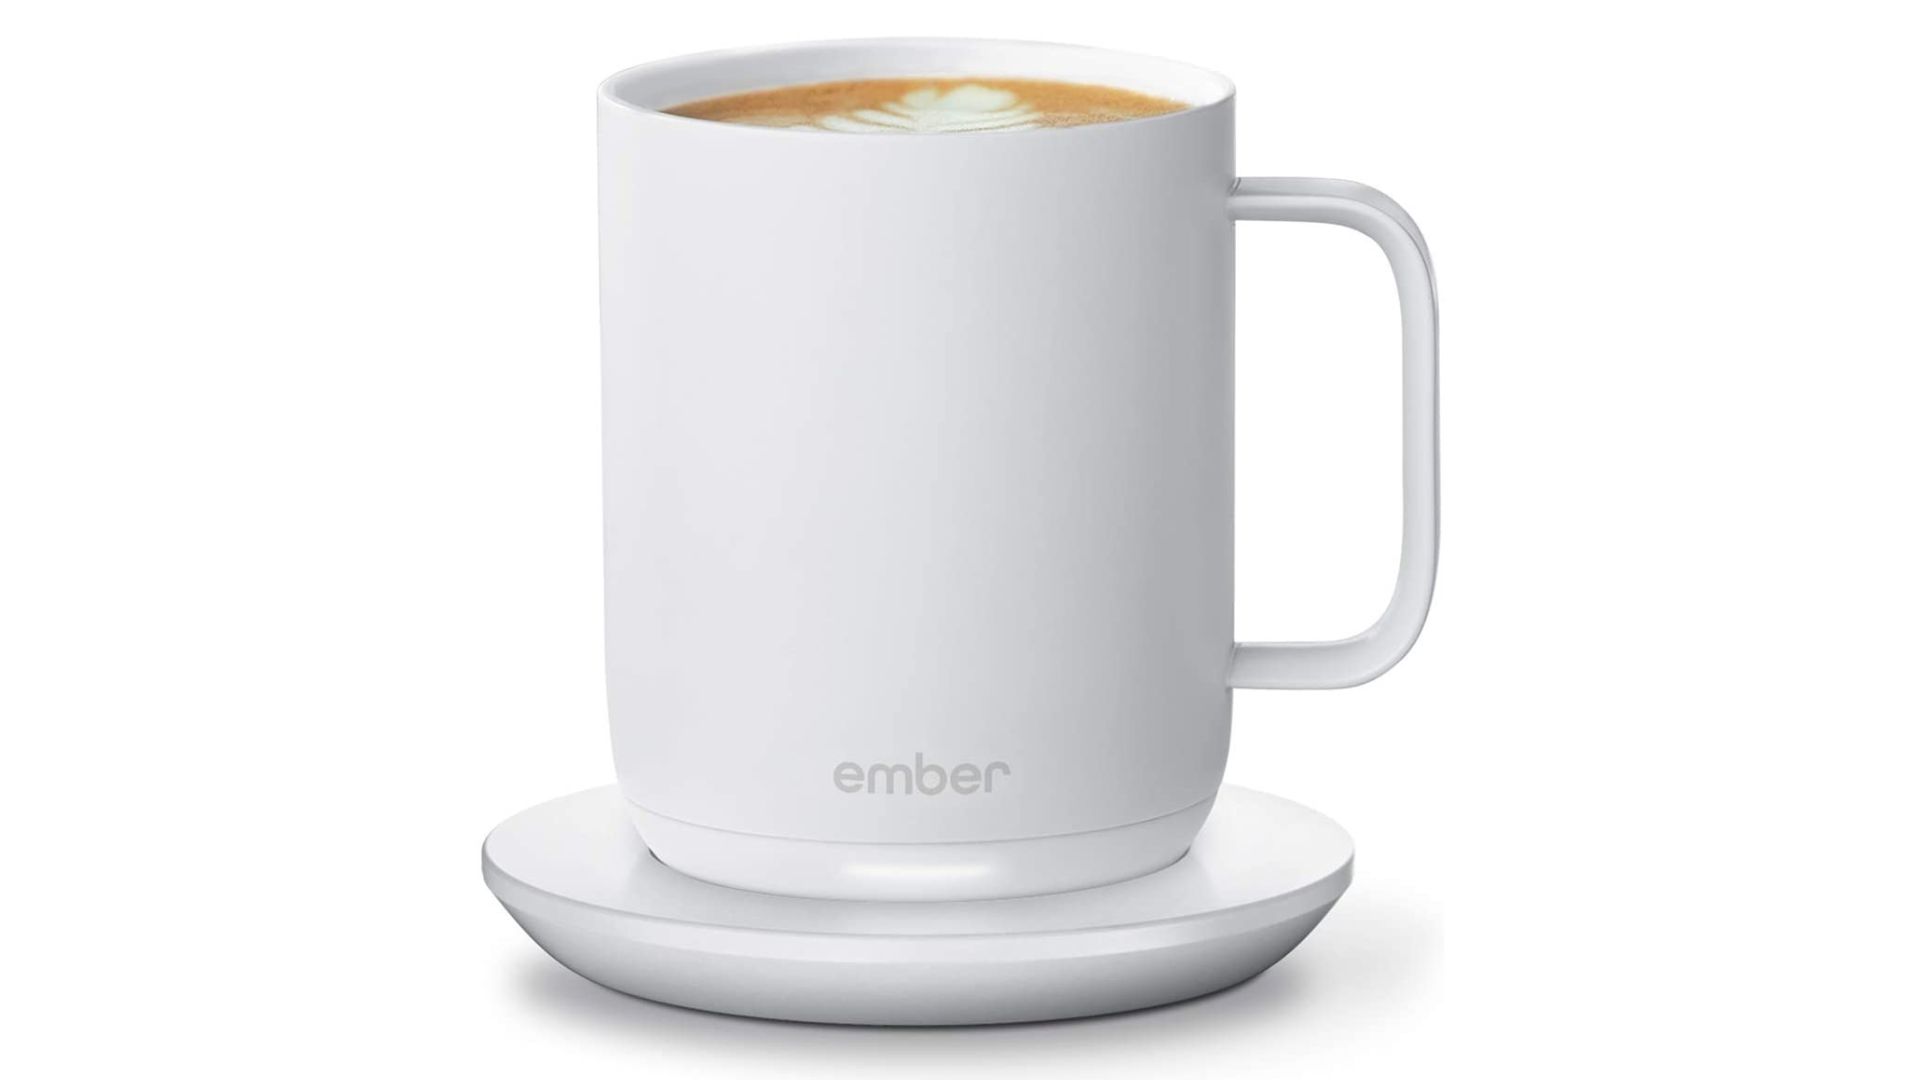 Ember Travel Mug 2 VS ThermoJoe Travel Mug: Don't Make a Mistake! 